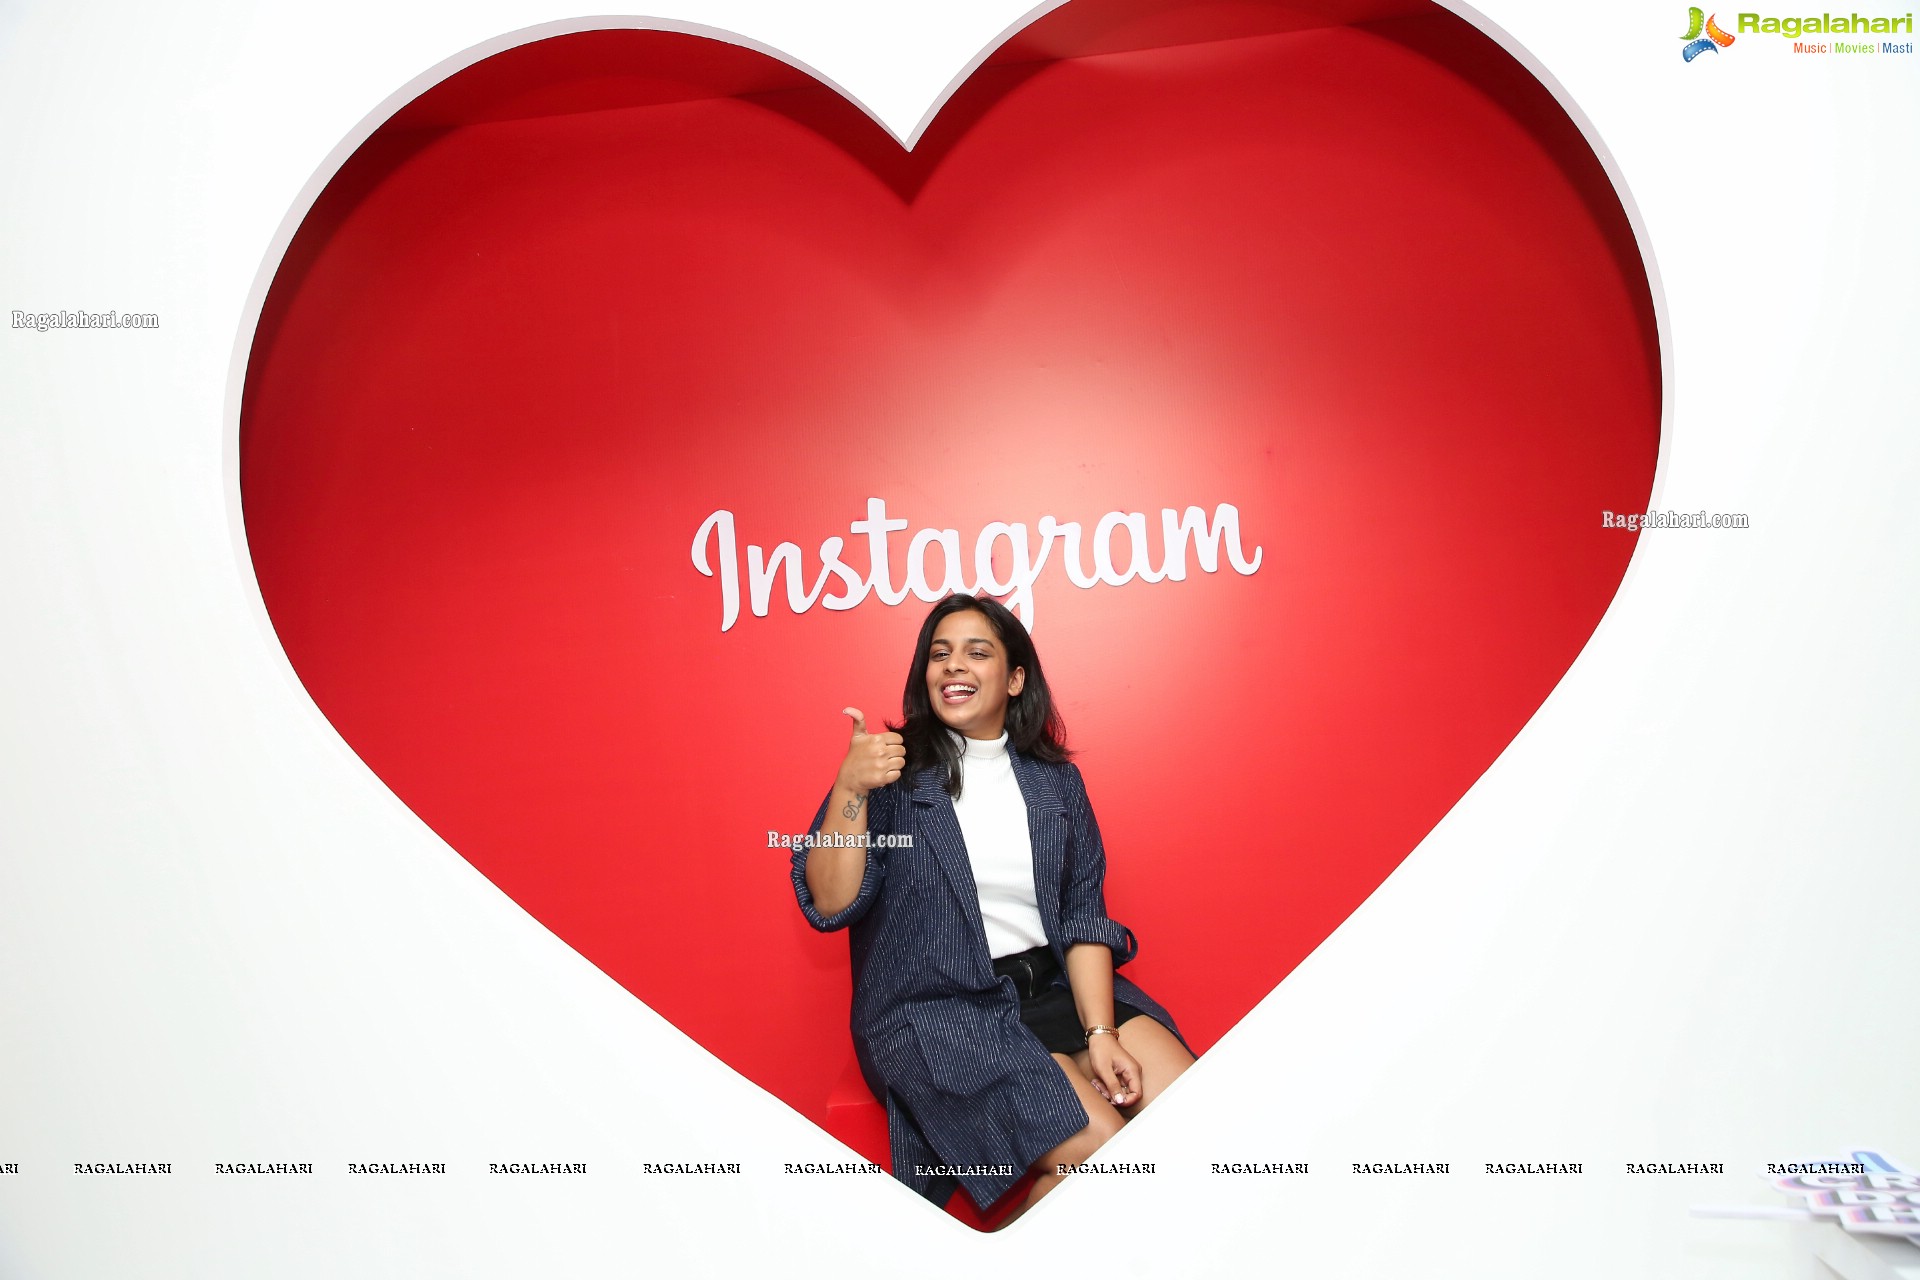 Mahathalli aka Jahnavi Dasetty at ‘Born on Instagram’ Launch in Hyderabad